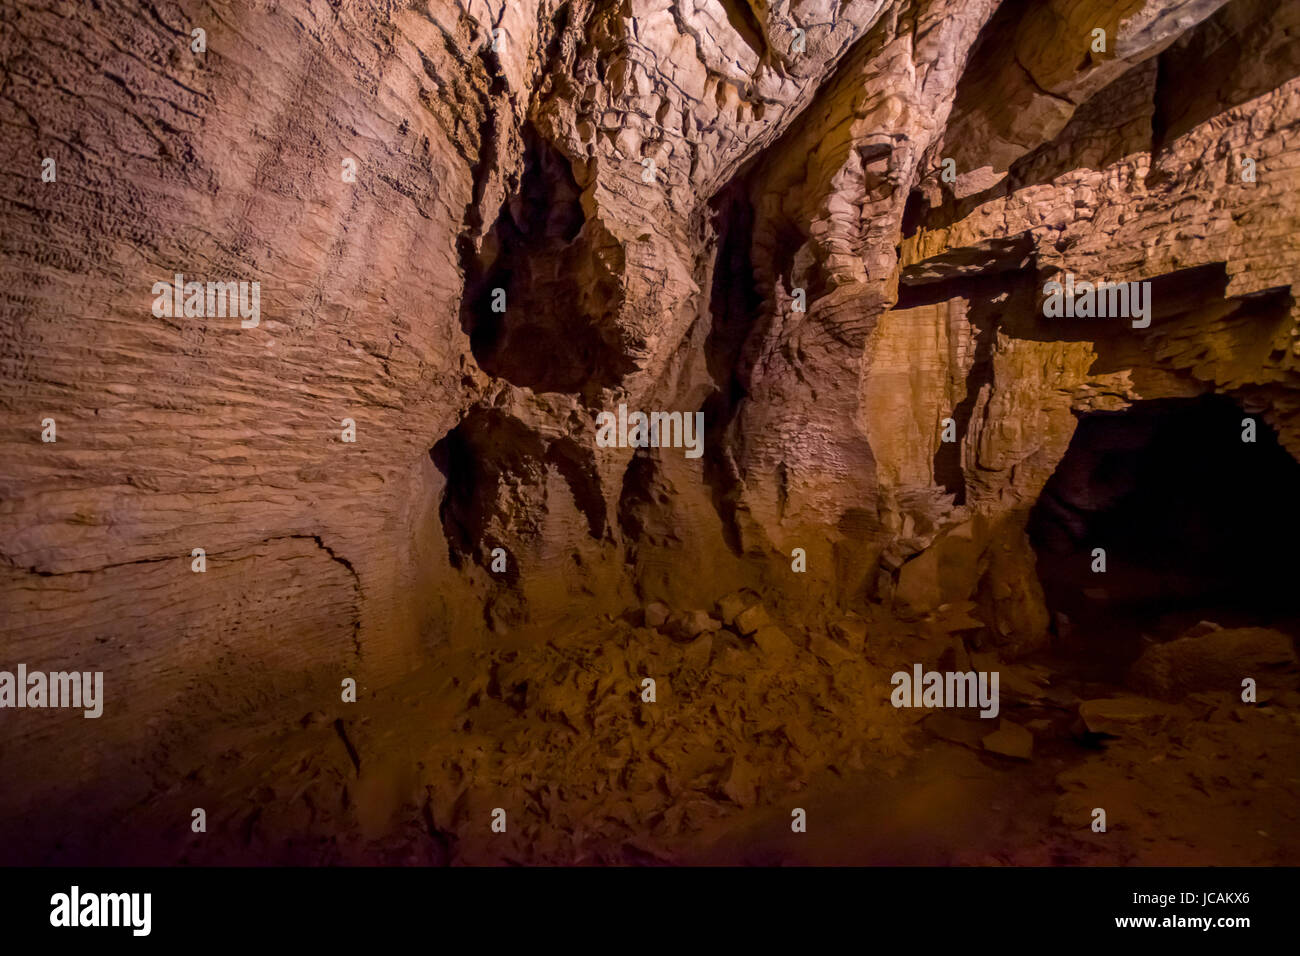 Amazing Waitomo Glowworm Caves located in New Zealand. Stock Photo